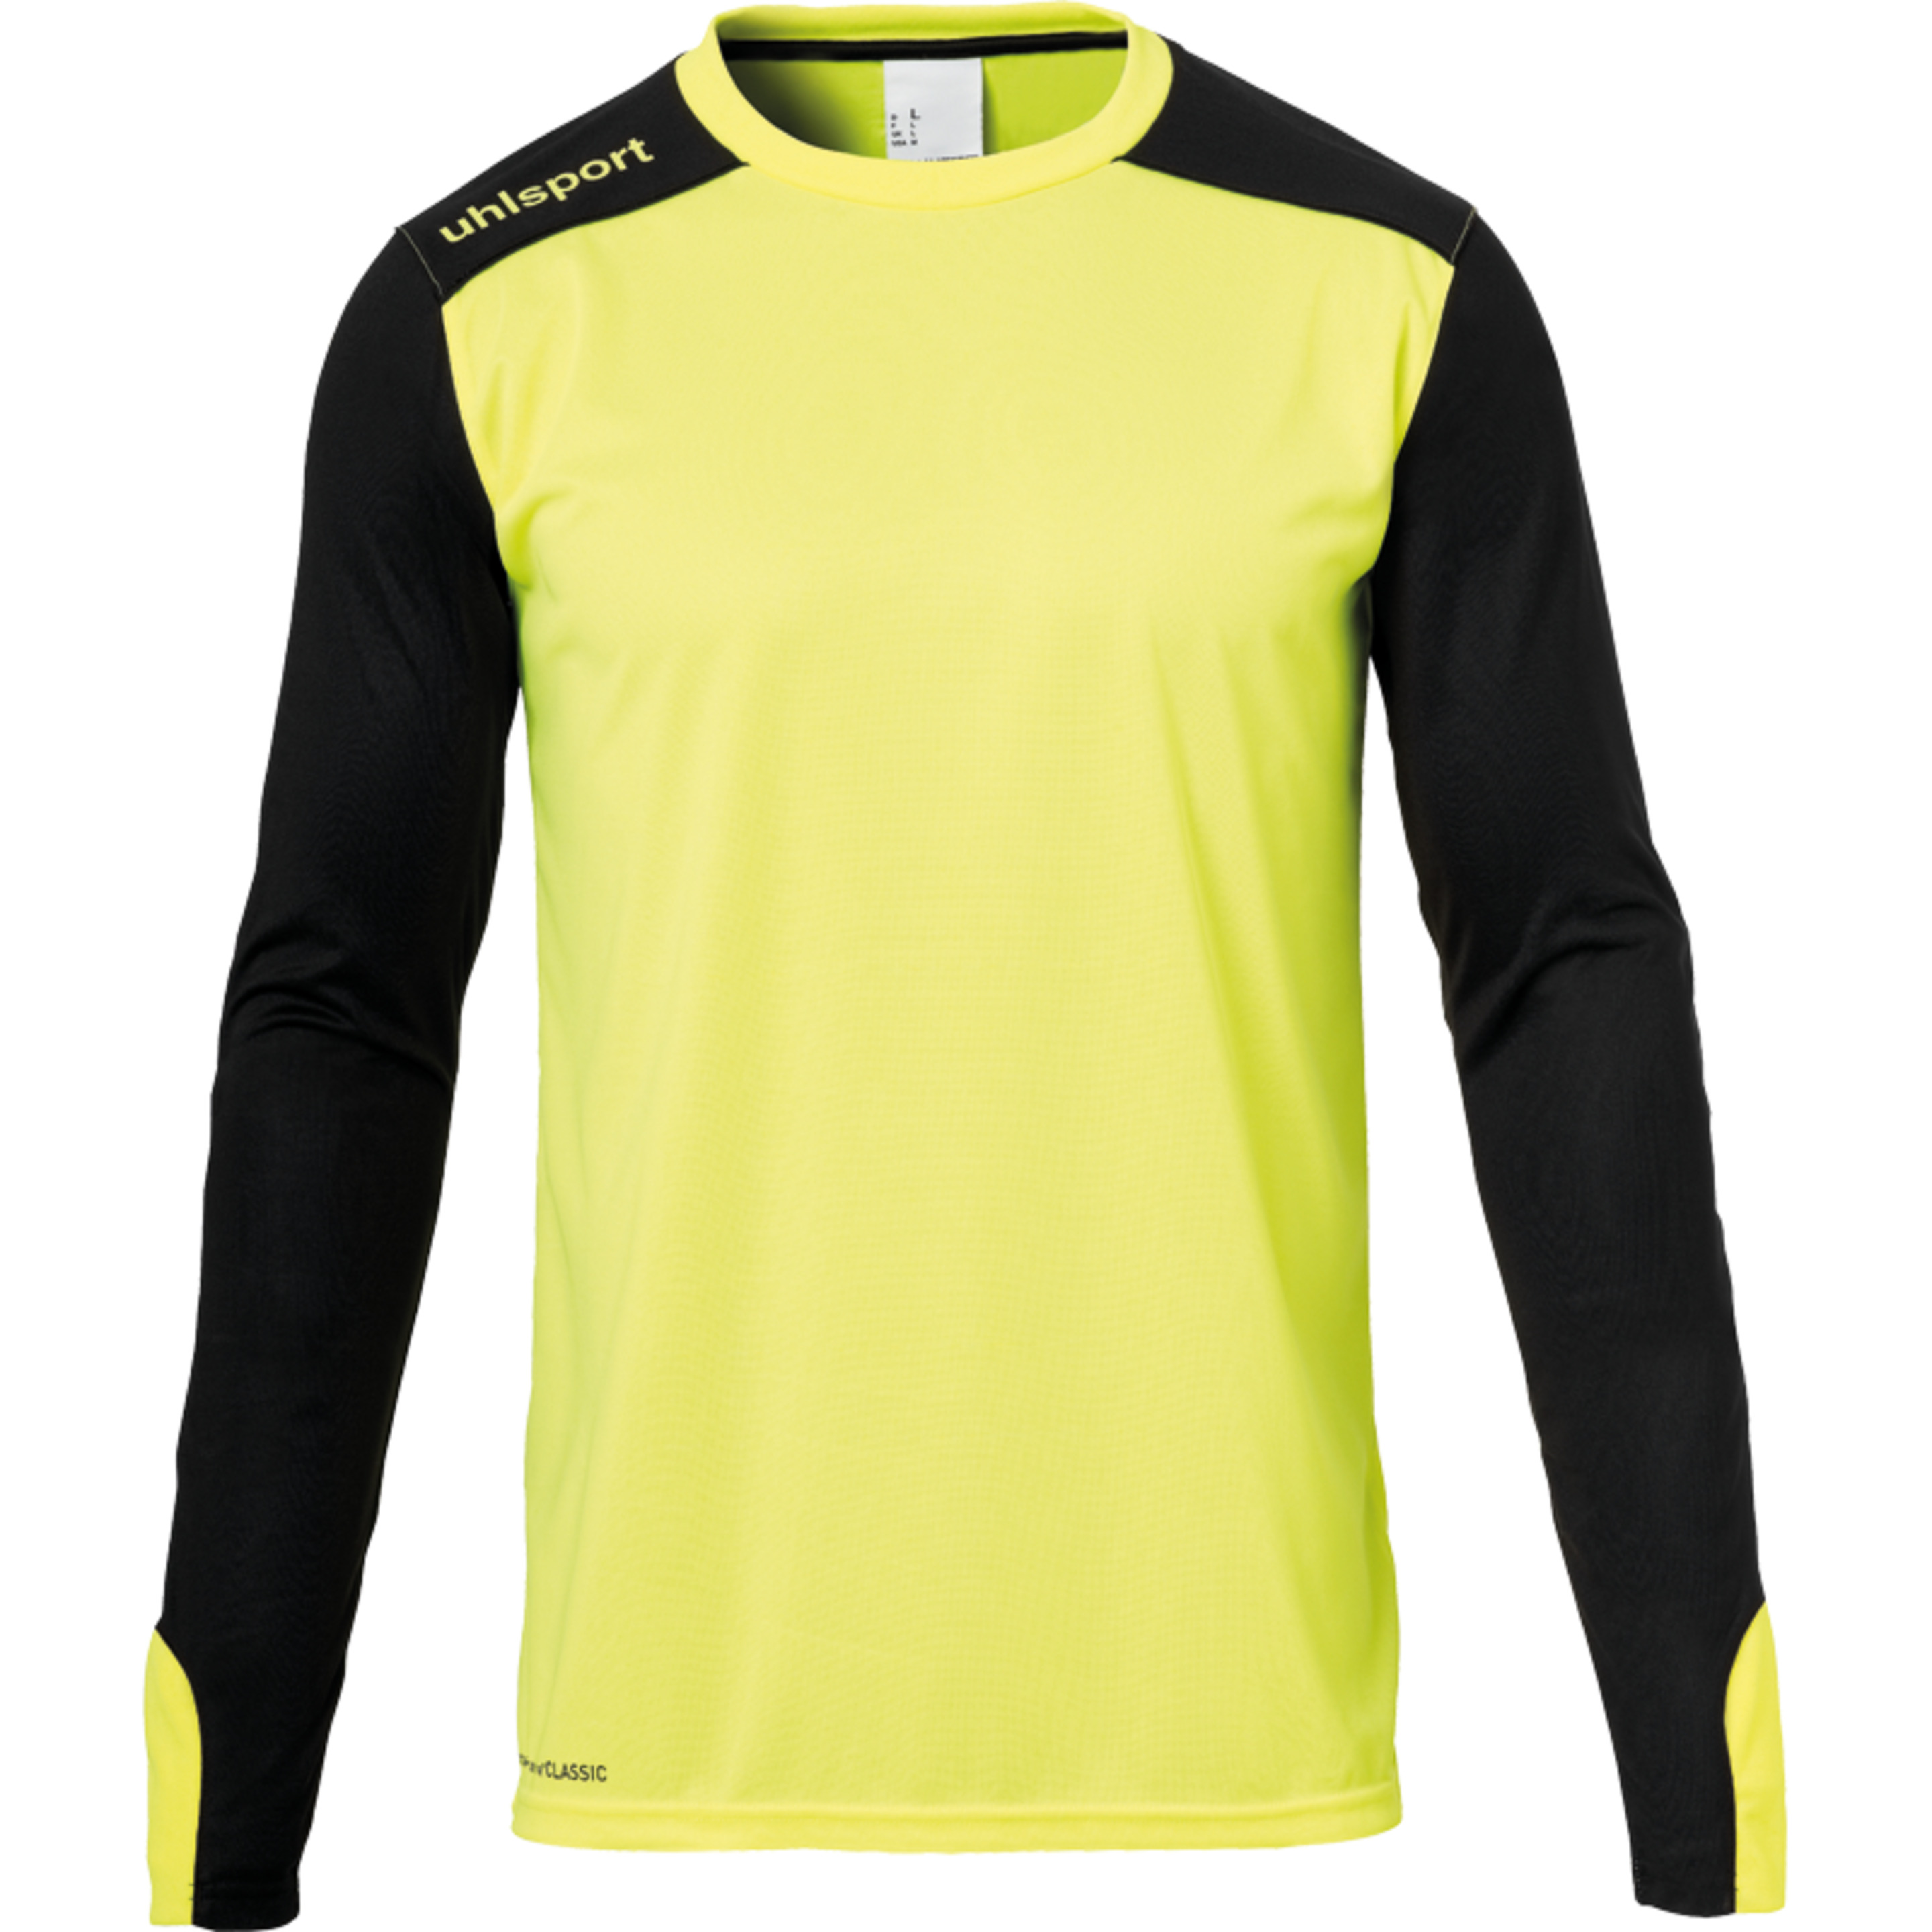 Tower Goalkeeper Shirt Ls Fluo Gelb/schwarz Uhlsport